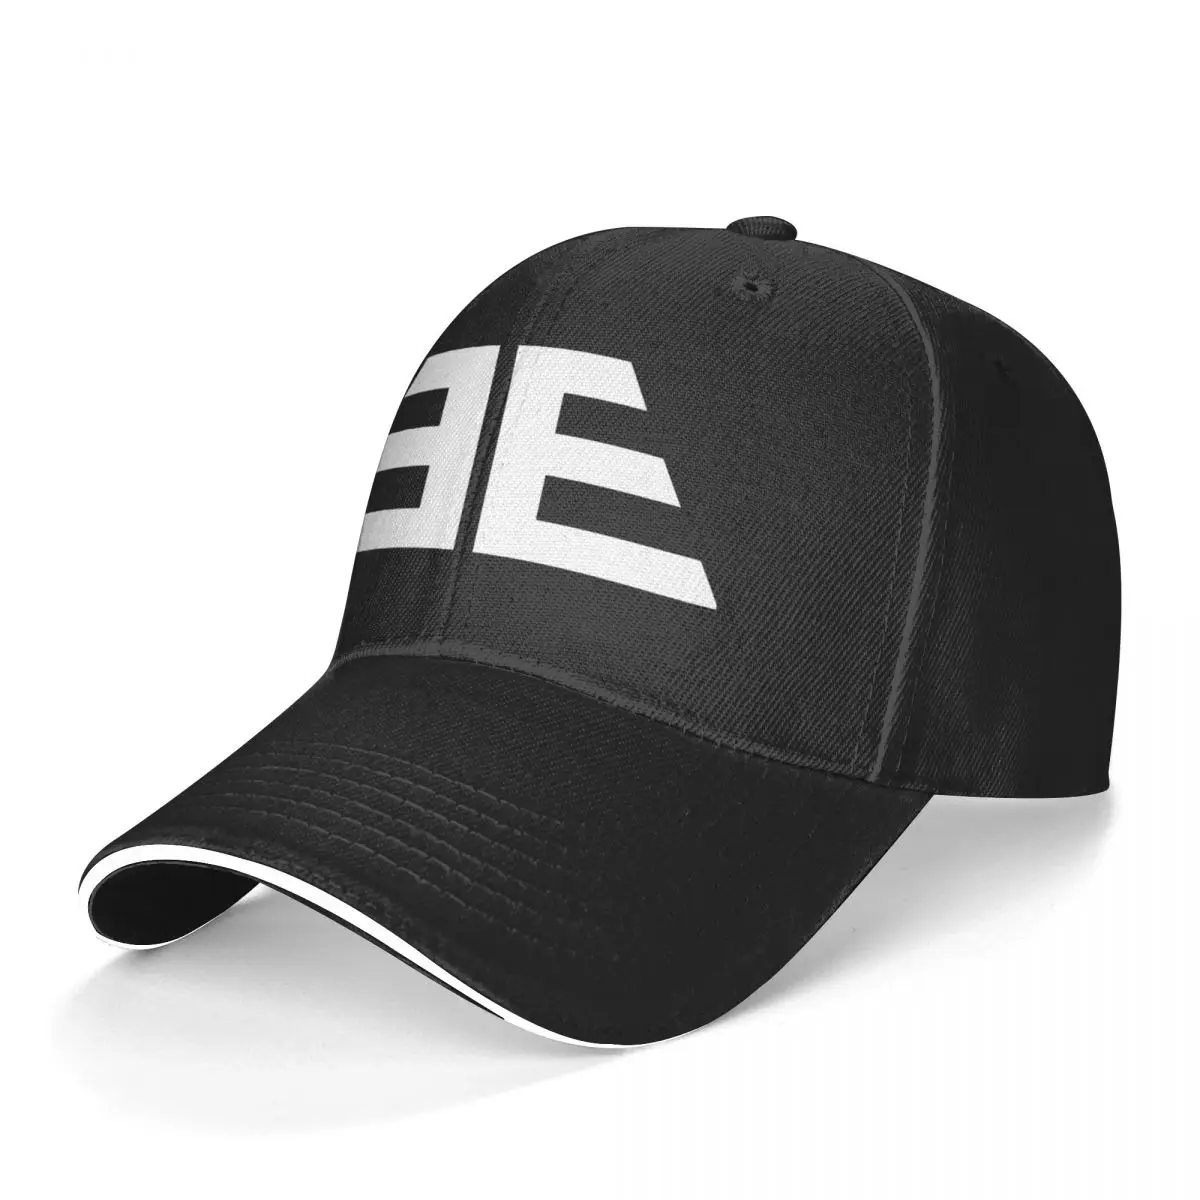 Imagine Dragons Baseball Cap Imagine Dragons Album Street Style Male Trucker Hat Design Outdoor Snapback Cap Birthday Gift